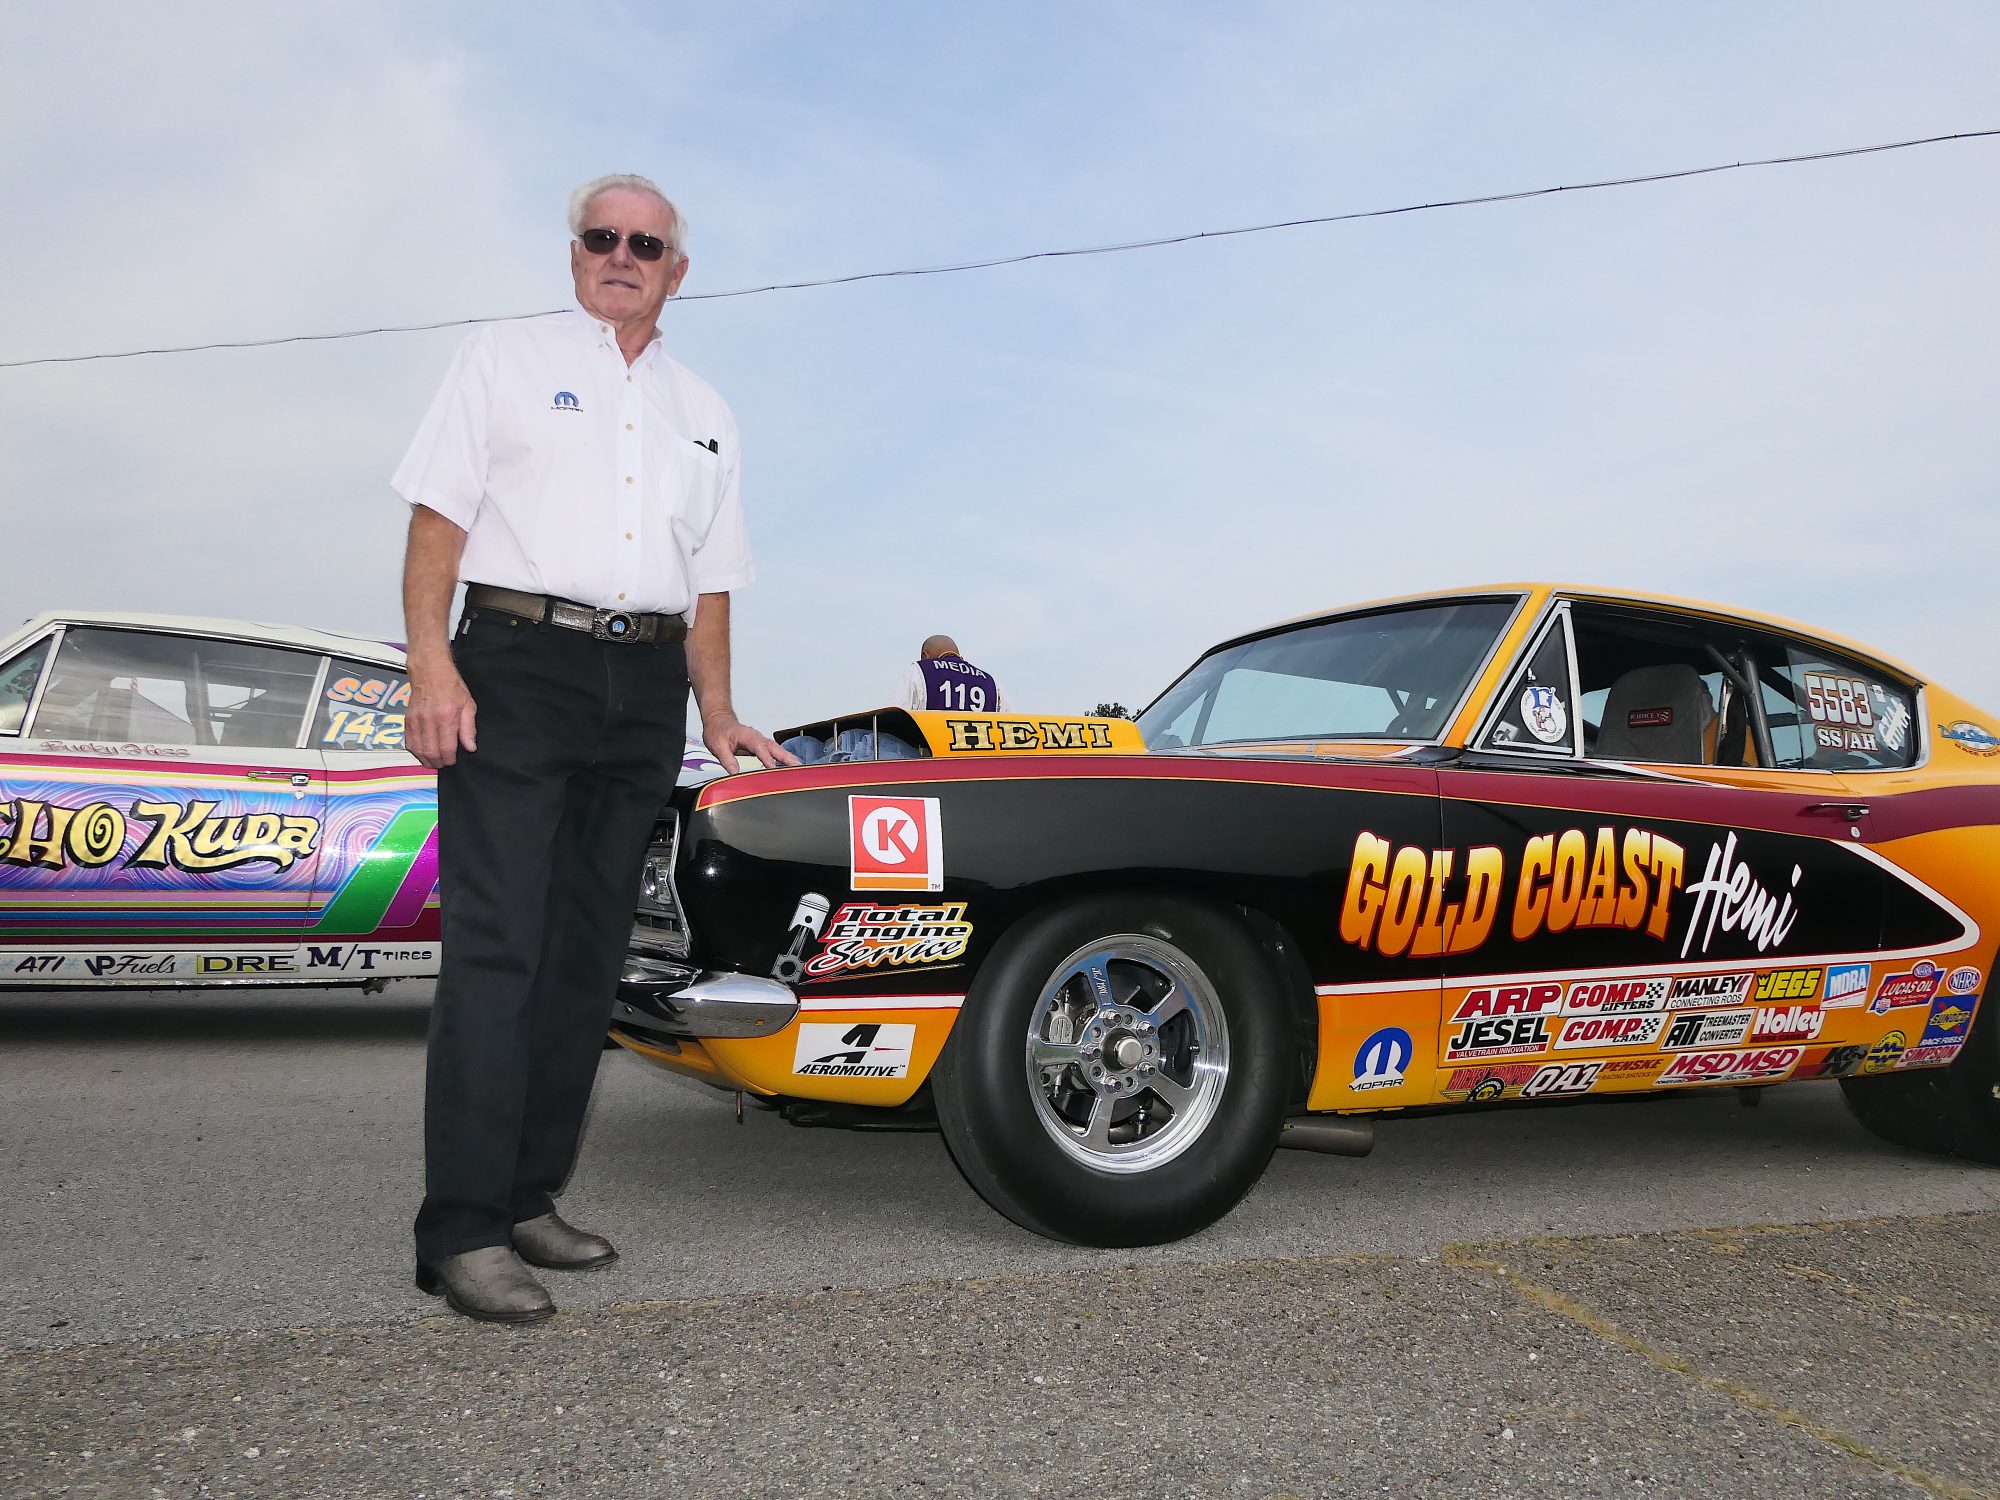 Herb McCandless posing next to his race car